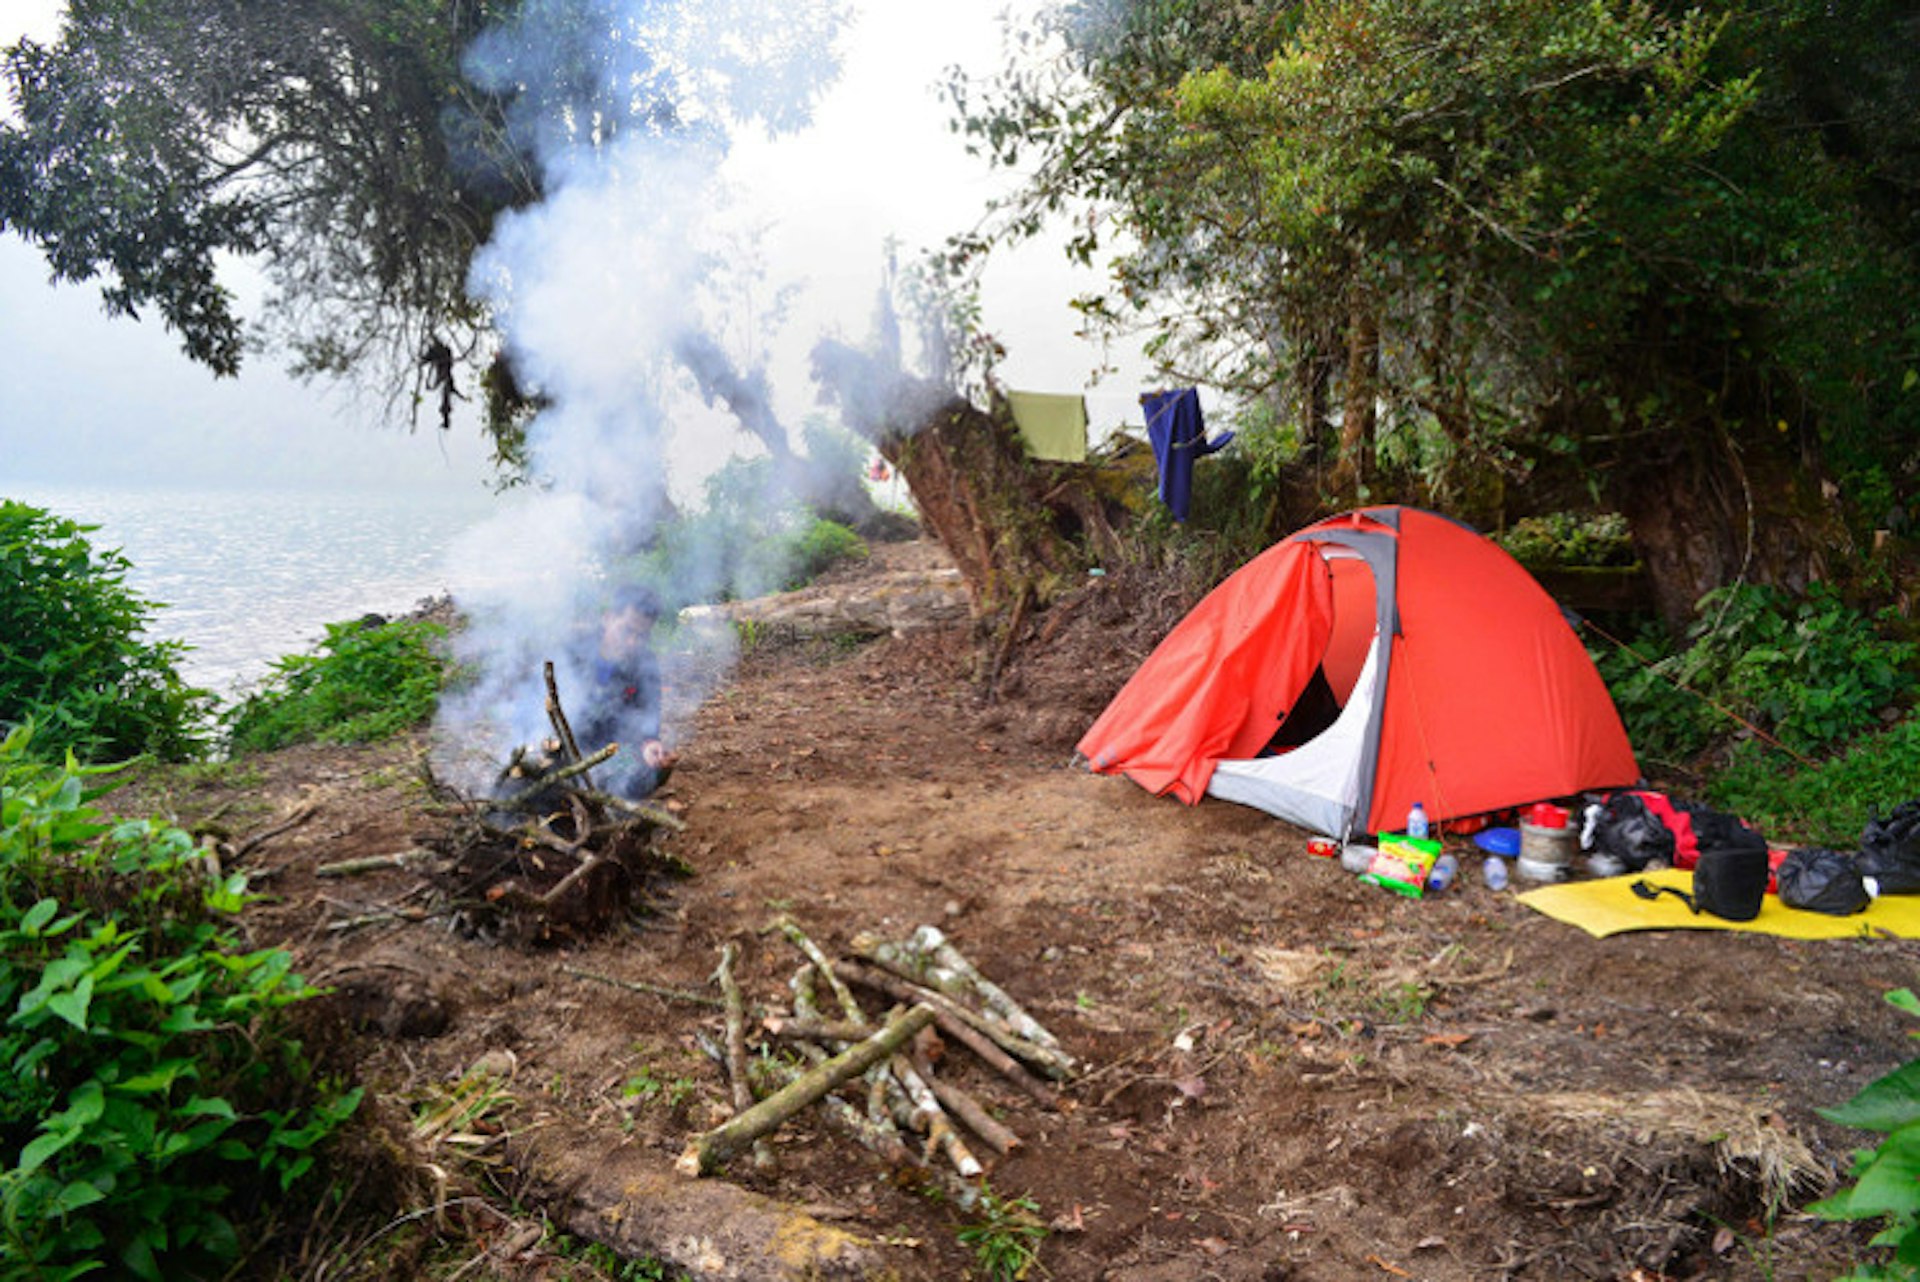 Camping near Danau Gunung Tujuh, Kerinci Seblat National Park, Sumatra. Image by Mark Eveleigh